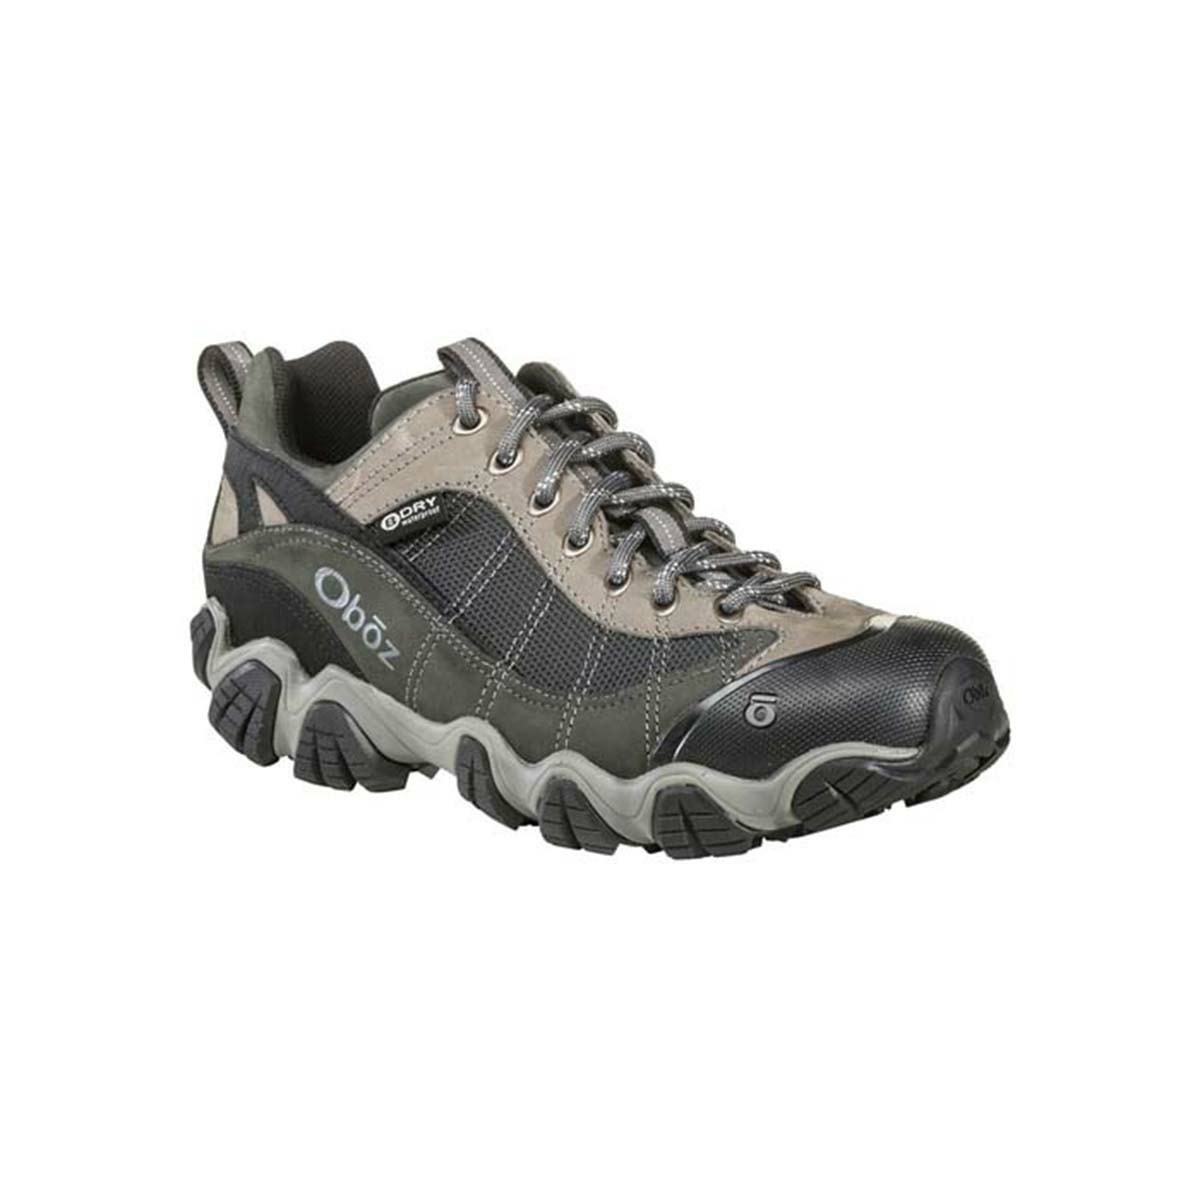 Oboz Hiking Shoes Discount - Firebrand II Low Waterproof Mens Grey